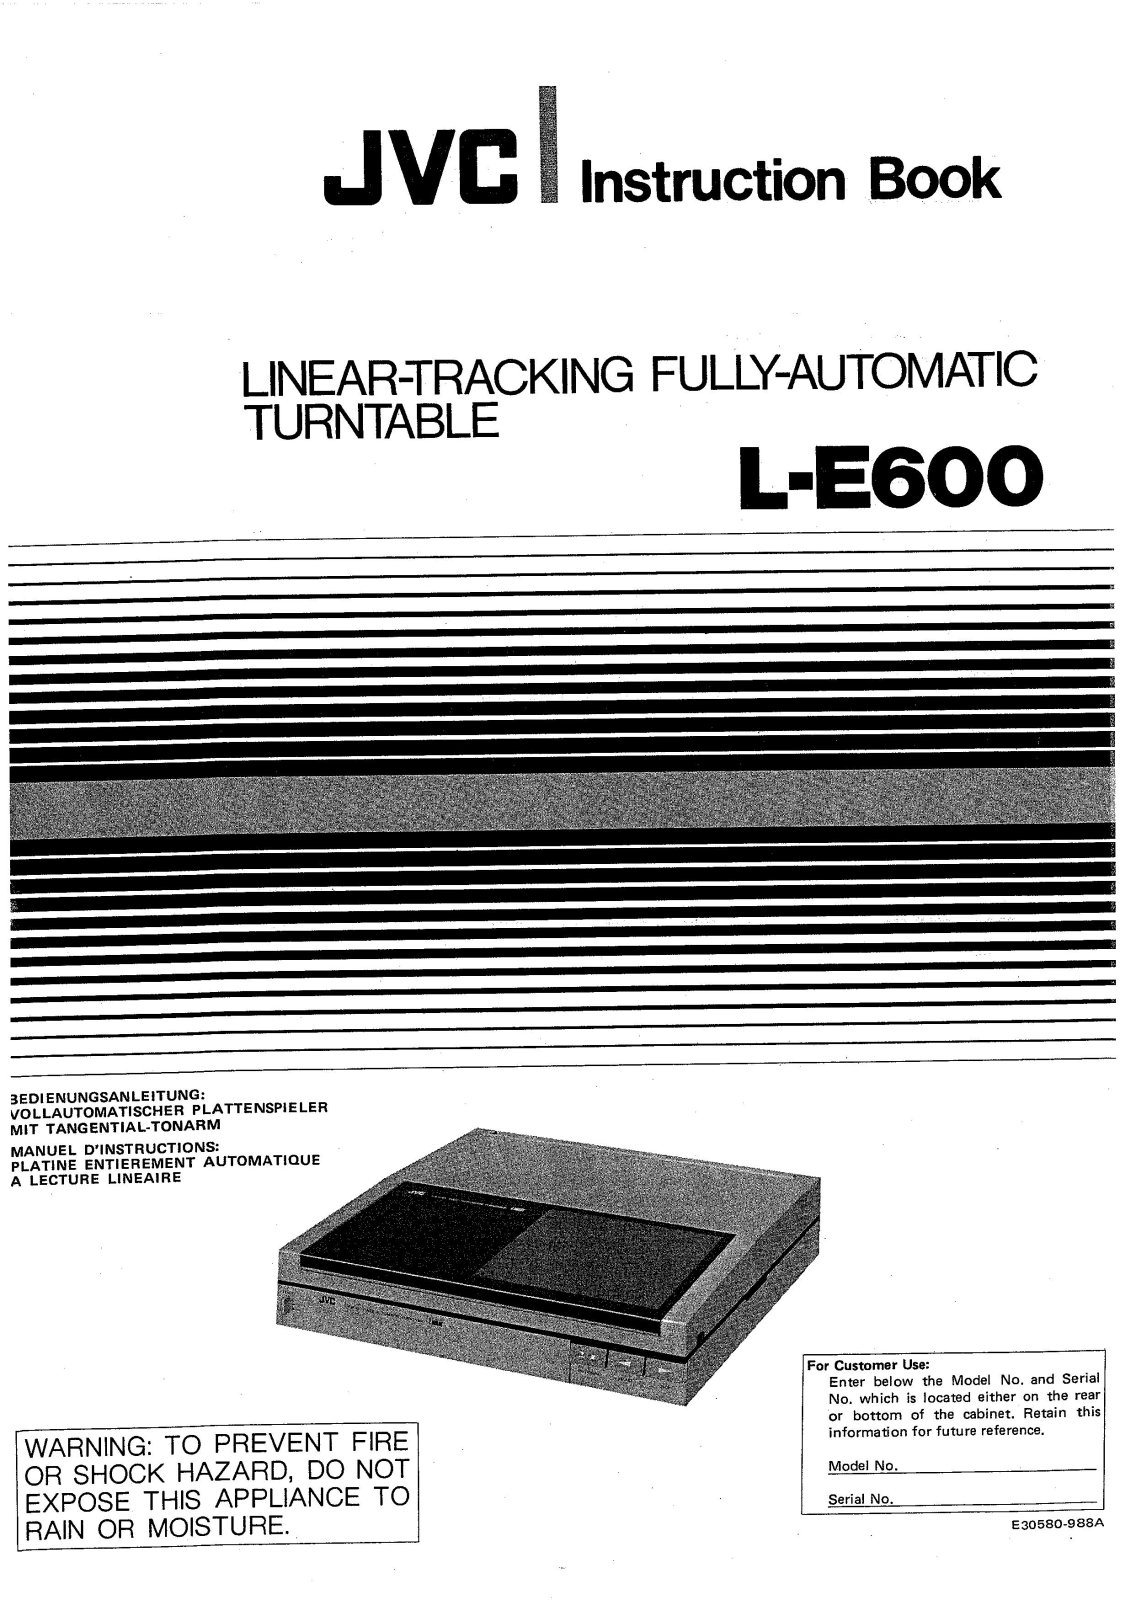 Jvc L-E600 Owners Manual